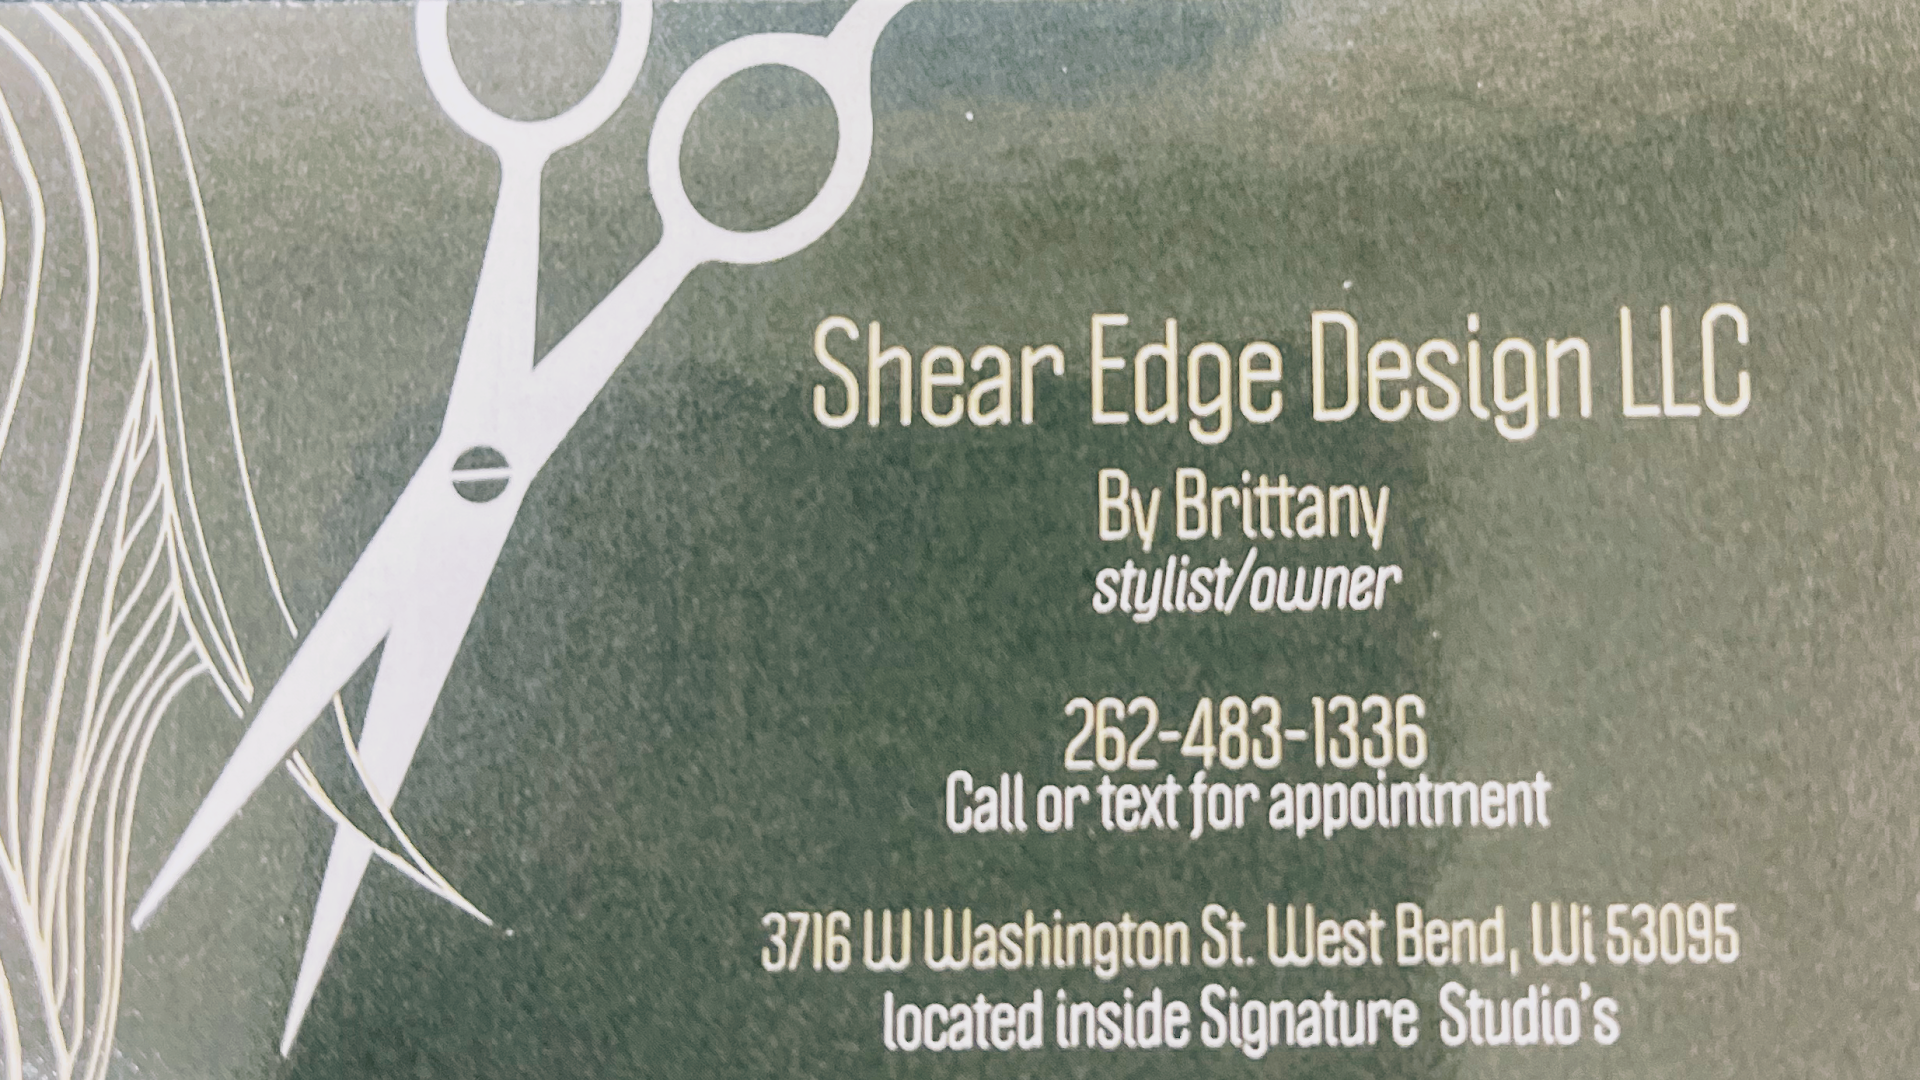 Shear Edge Design LLC